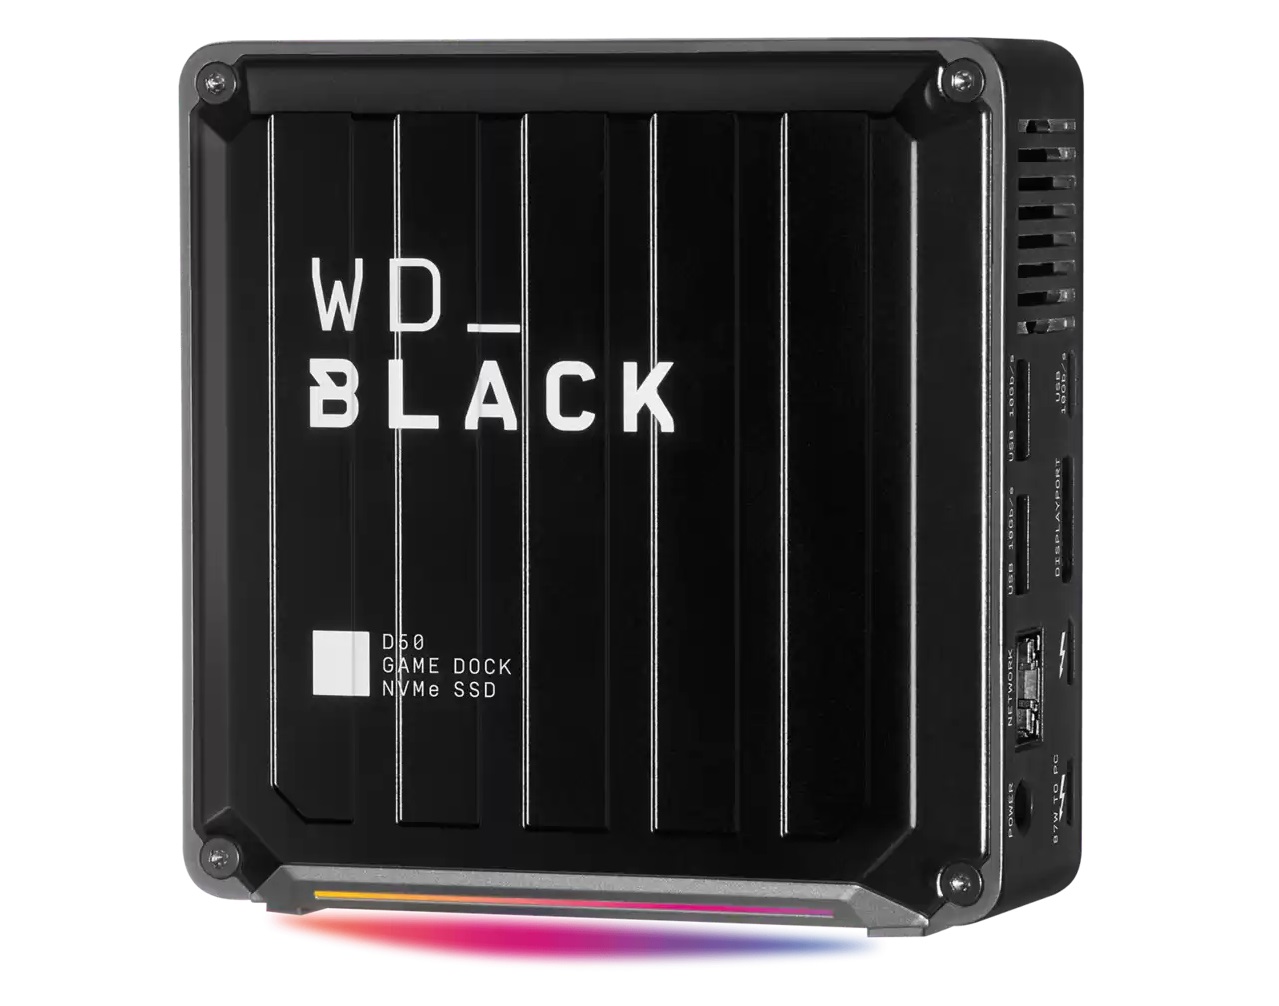 WD Black D50 Gaming Dock